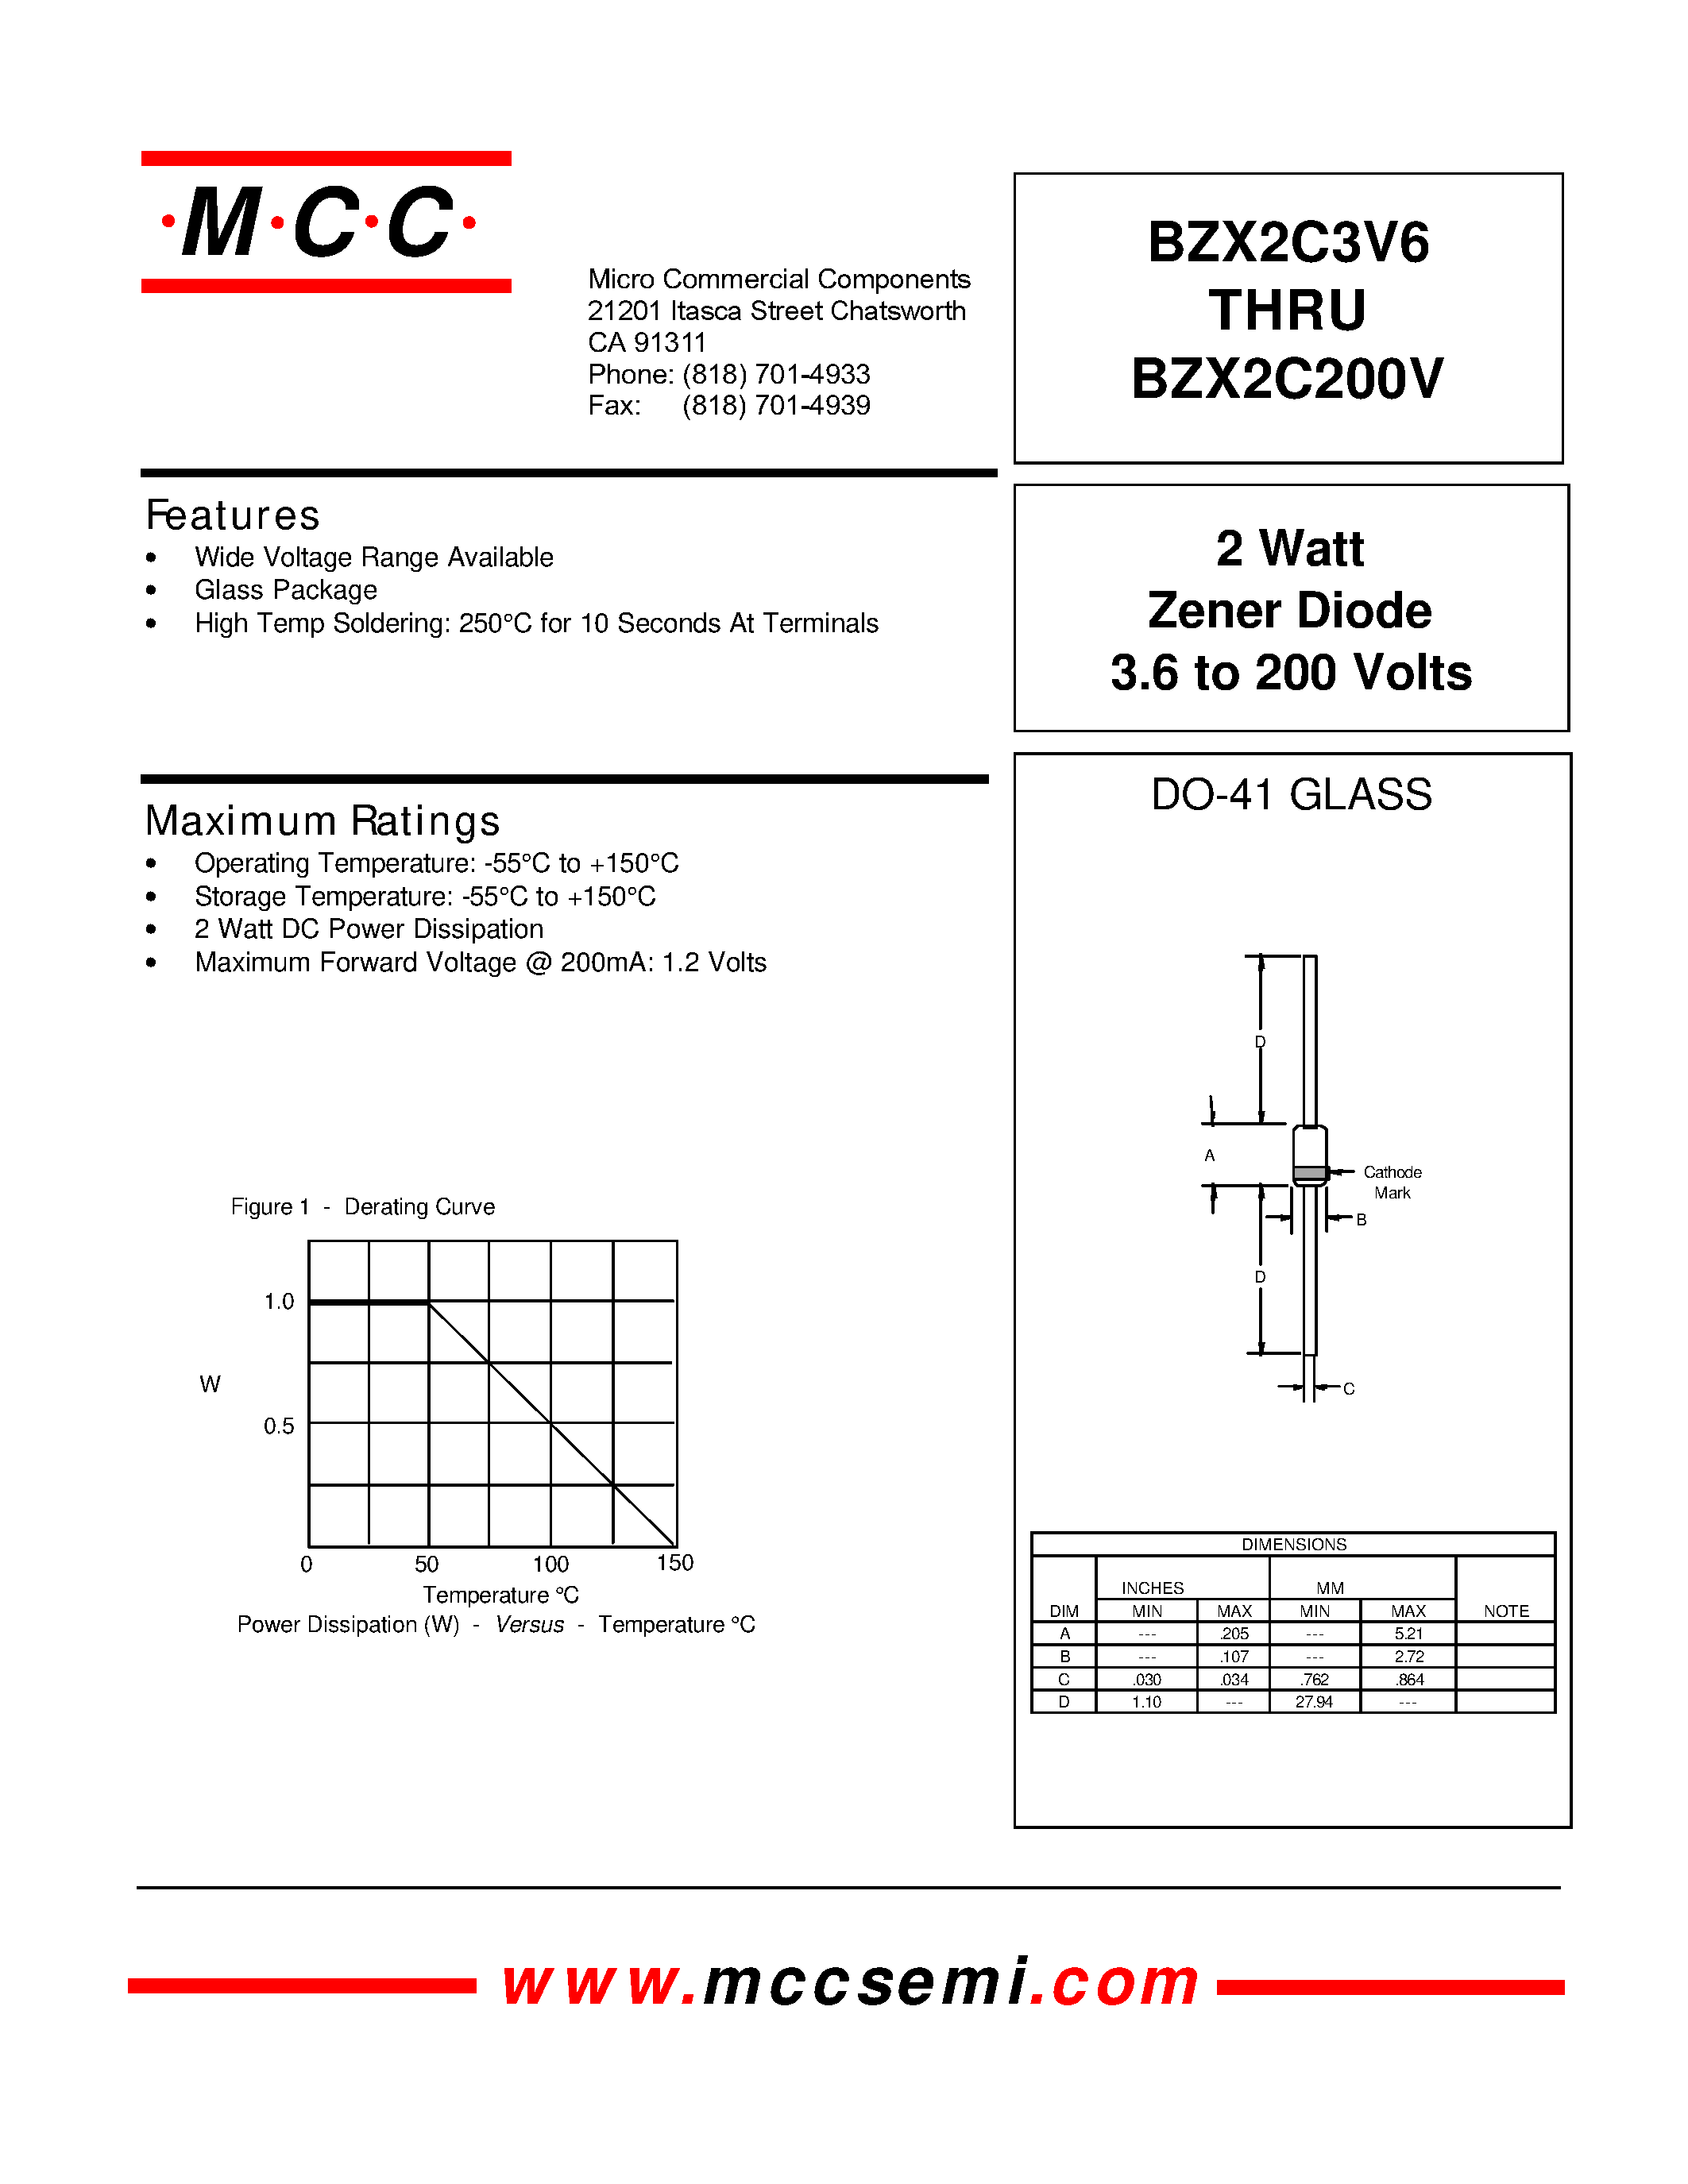 Даташит BZX2C75V-2 Watt Zener Diode 3.6 to 200 Volts страница 1